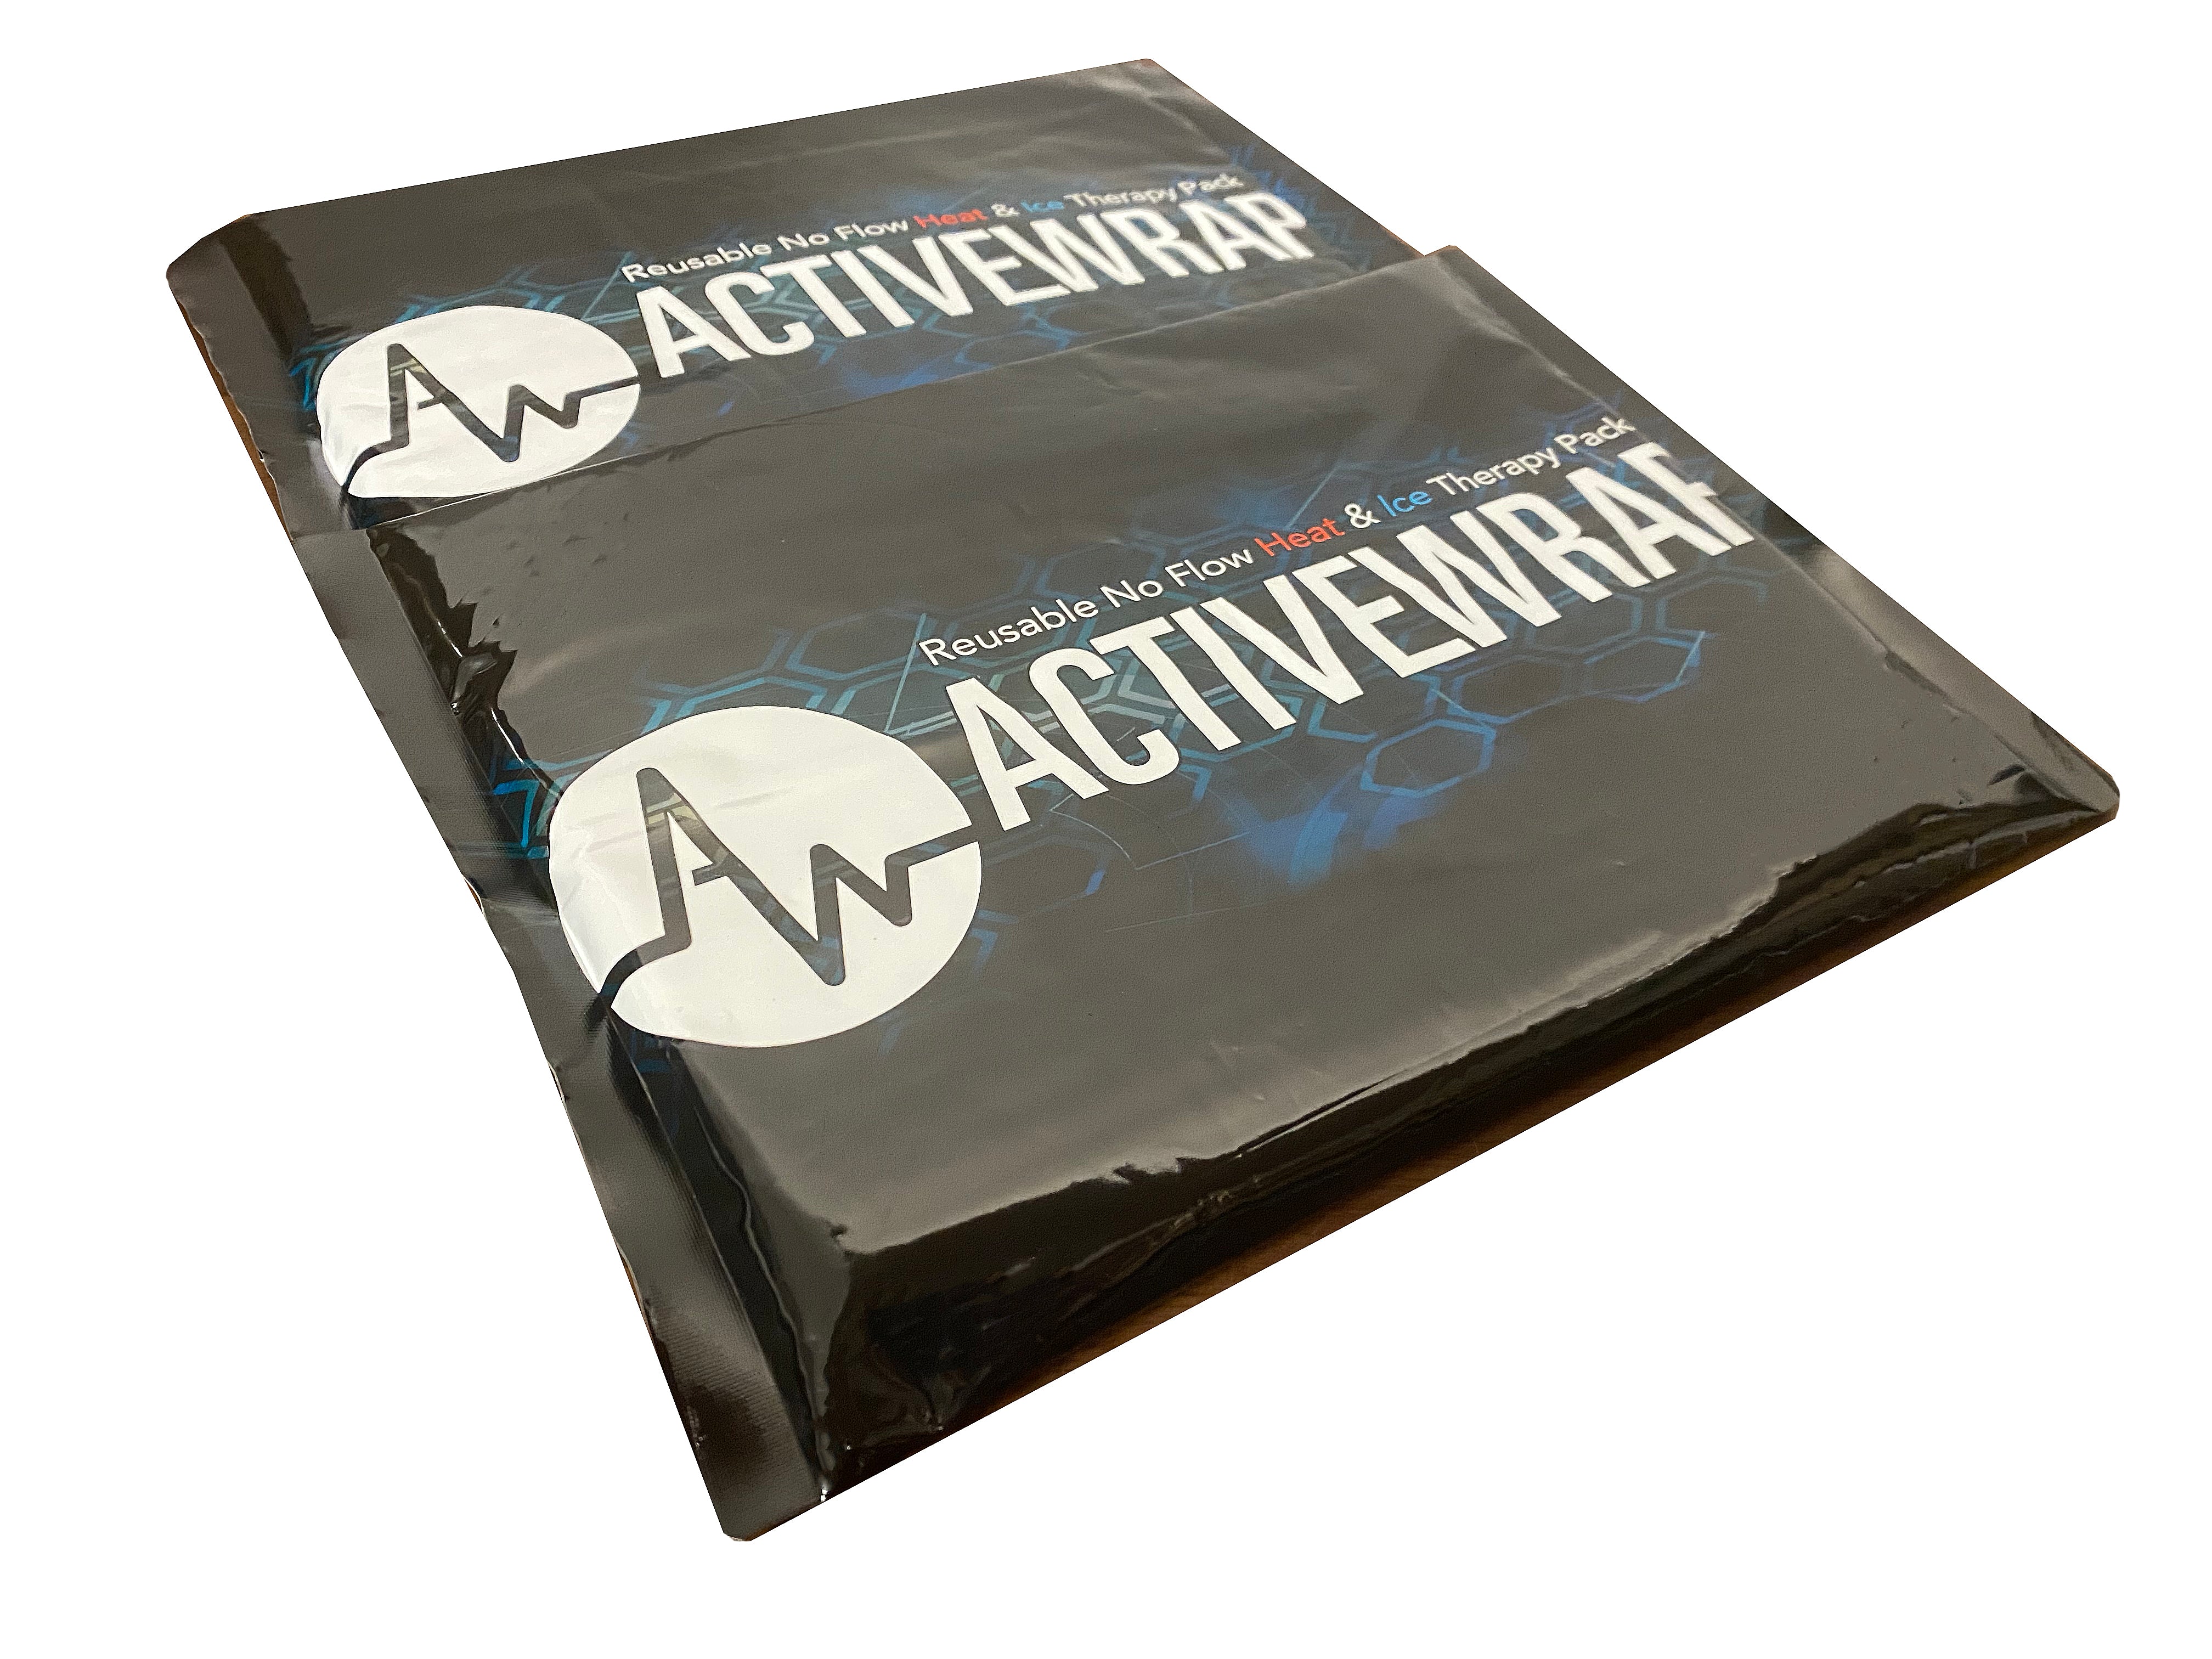 ActiveWrap Back Heat & Ice Wrap - Large/XL